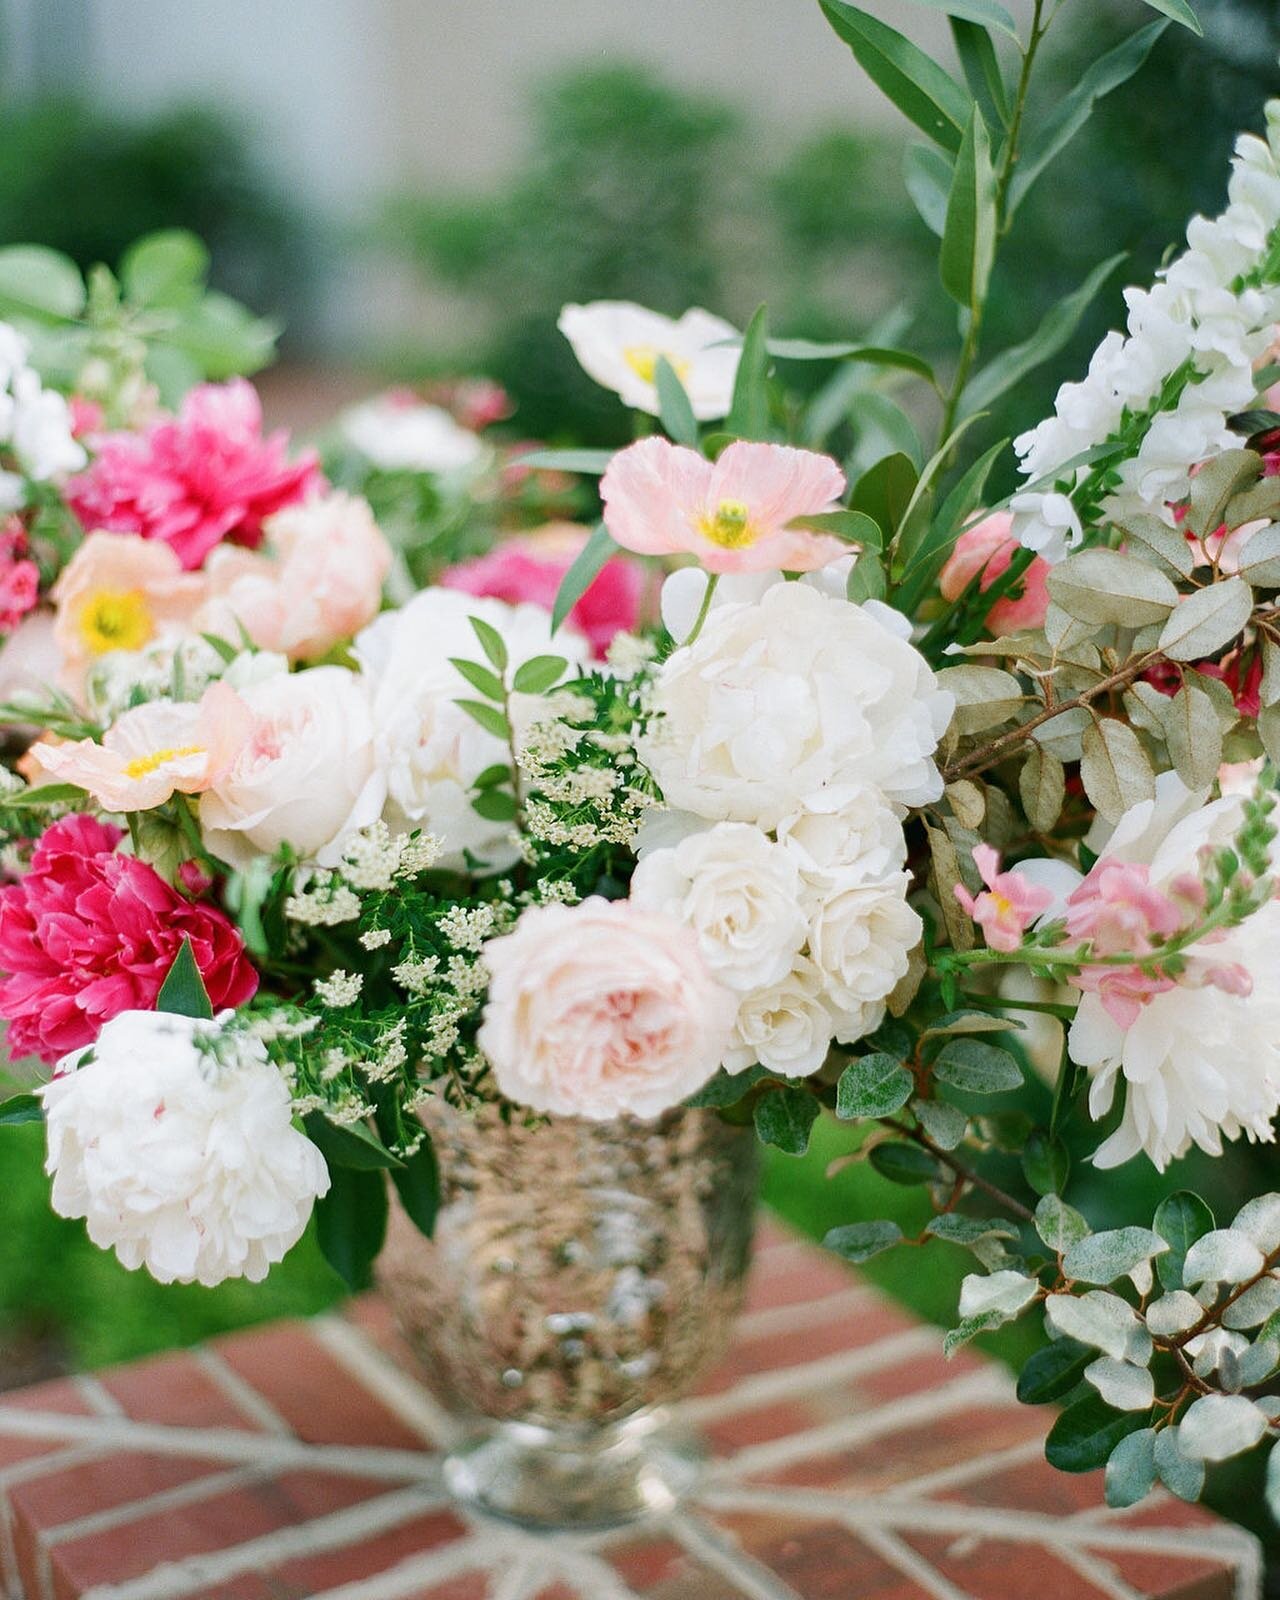 Thinking about spring florals x 100 today! Needed some color in my life. ❤️🙌🧚🏻&zwj;♂️
.
📸: @kaseysmithcreative 
⛪️: @barnofchapelhill 
📋: @kasteventsandco 
.
#barnofchapelhill #barnofchapelhillwedding #barnwedding #barn #luxurywedding #wedding #